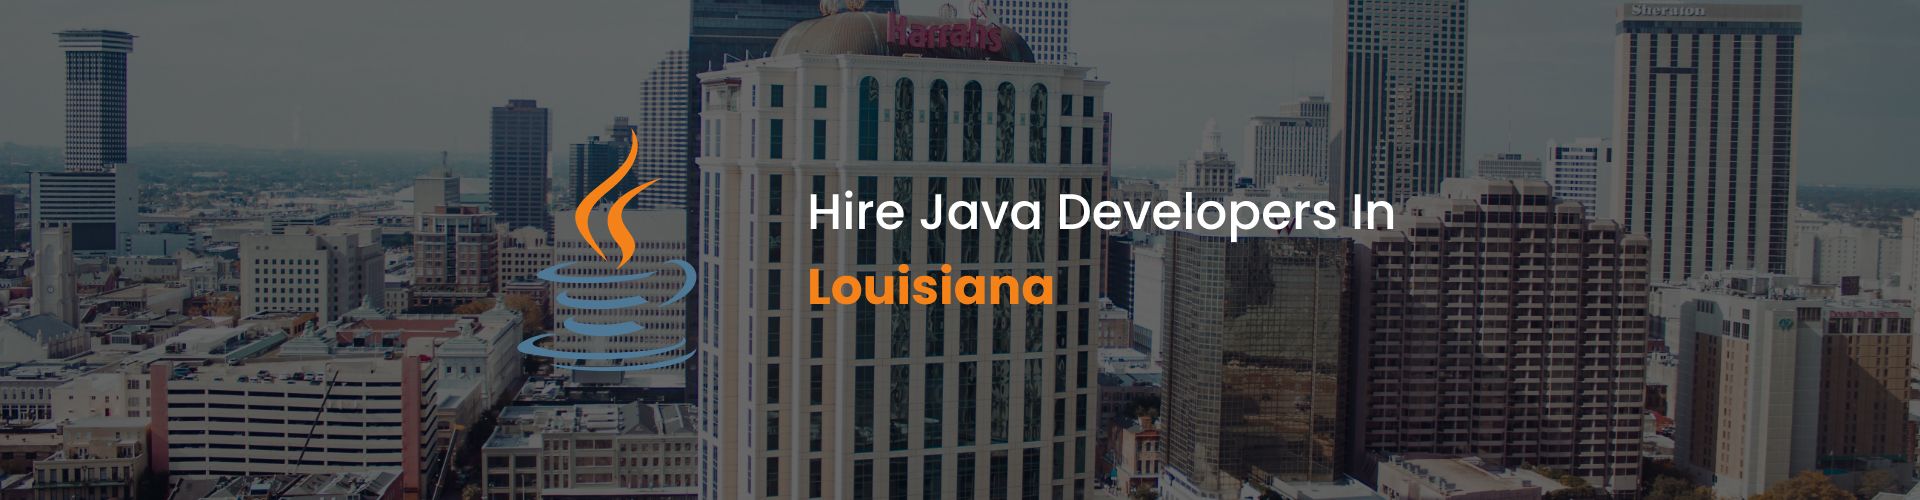 hire java developers in louisiana